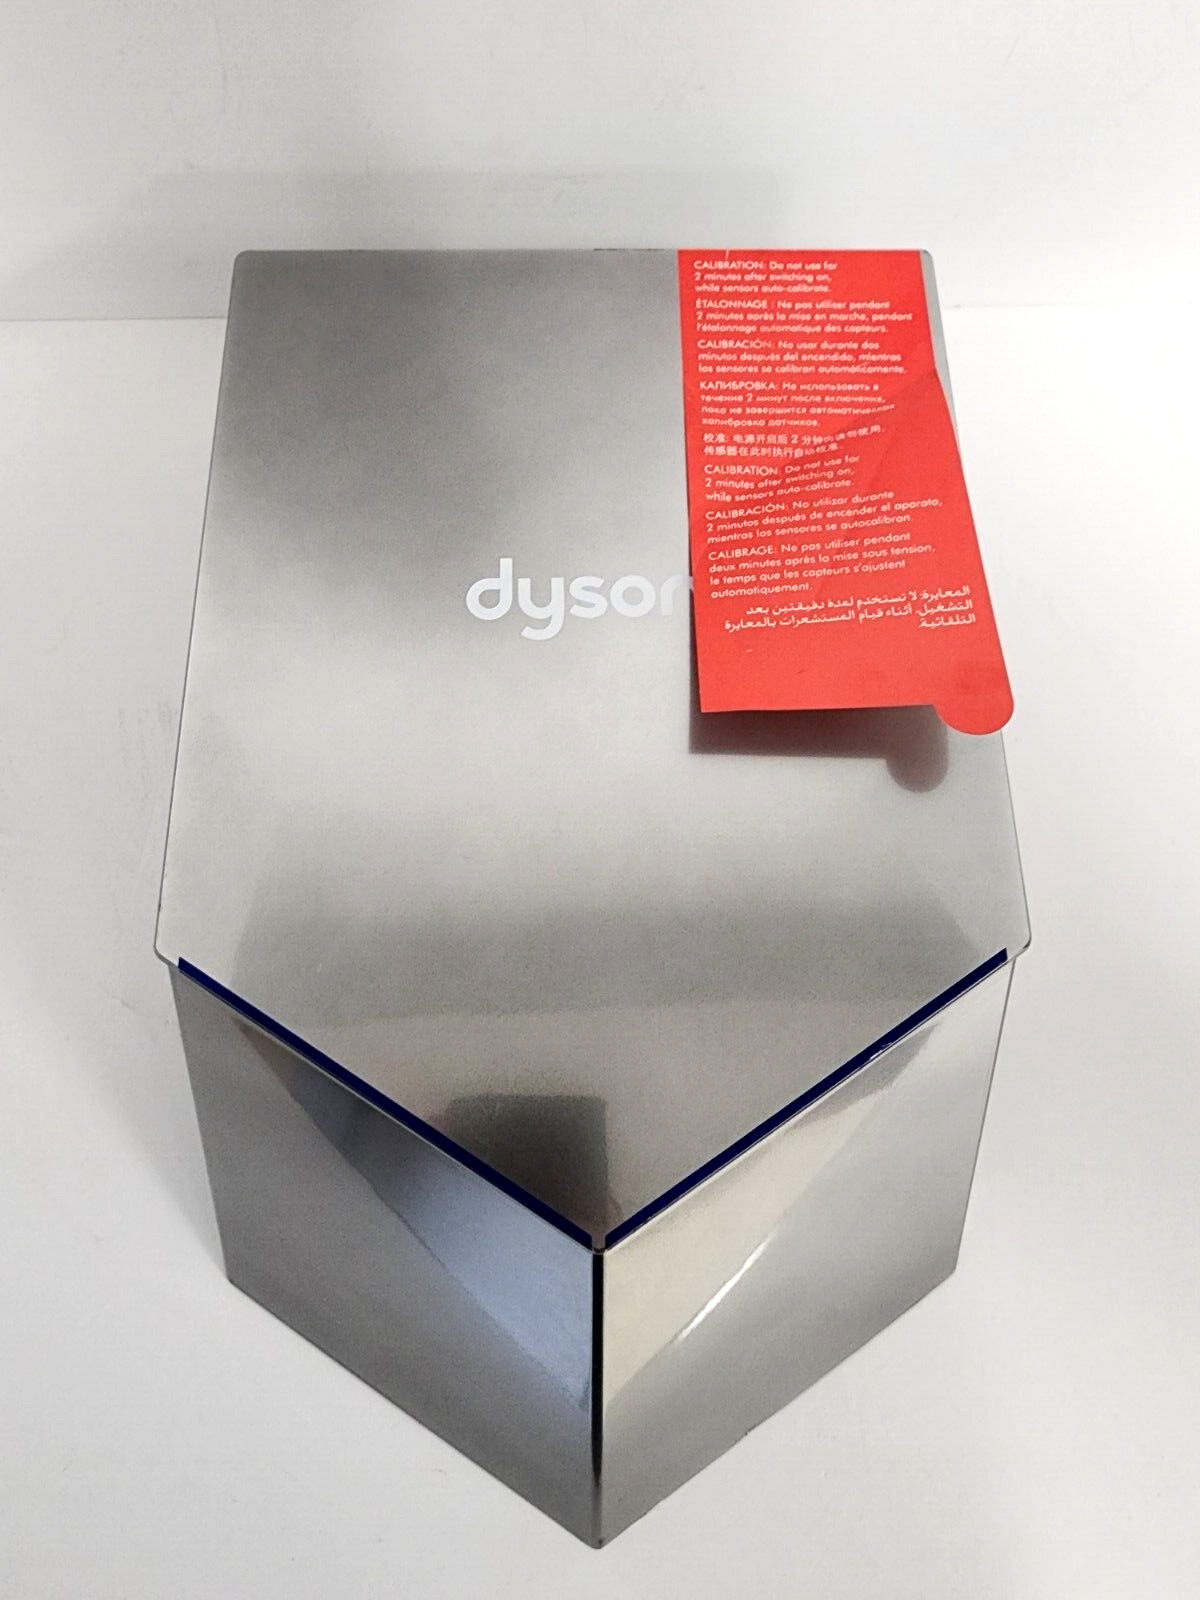 DYSON AirBlade V HU02 Hand Dryer NICKEL 120V Minor Scratch